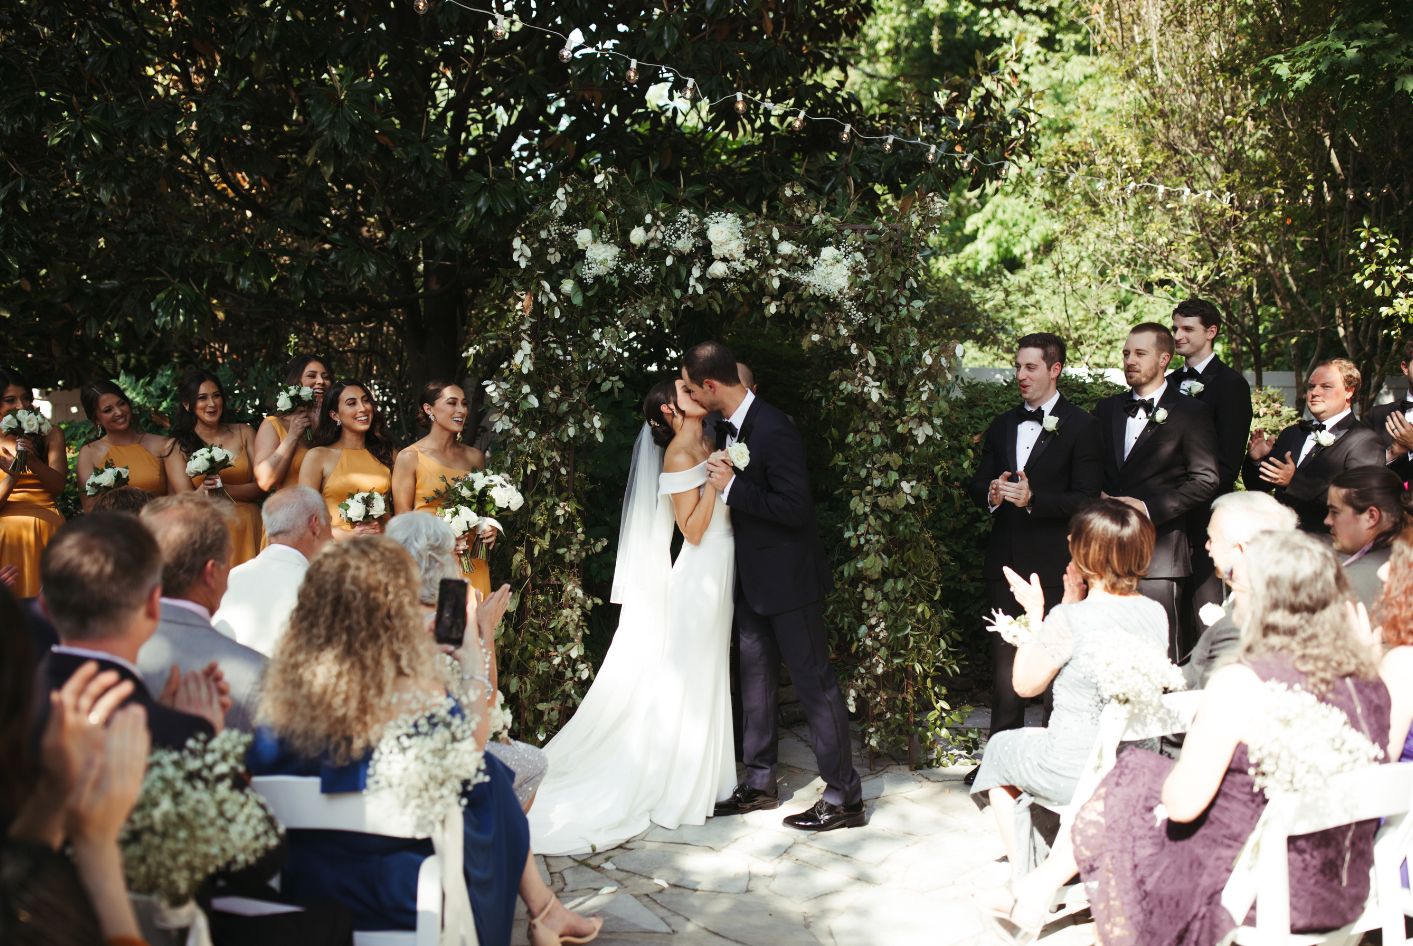 Top 10 Ceremony Looks for Your Nashville Garden Wedding